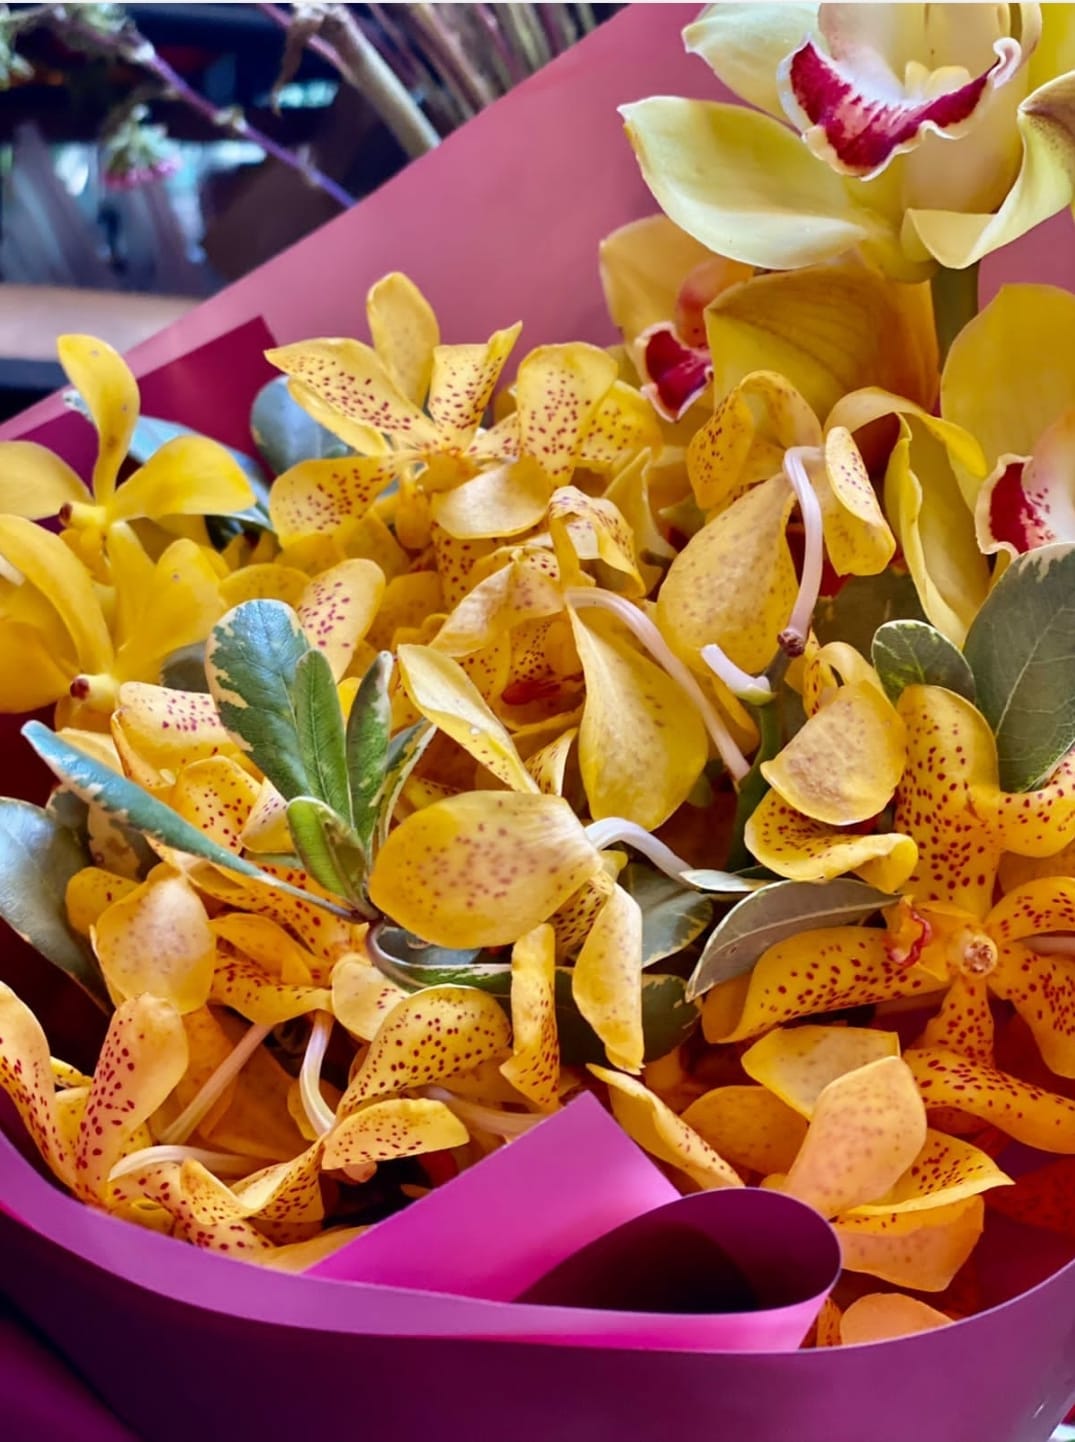 Bouquet de Orquídeas